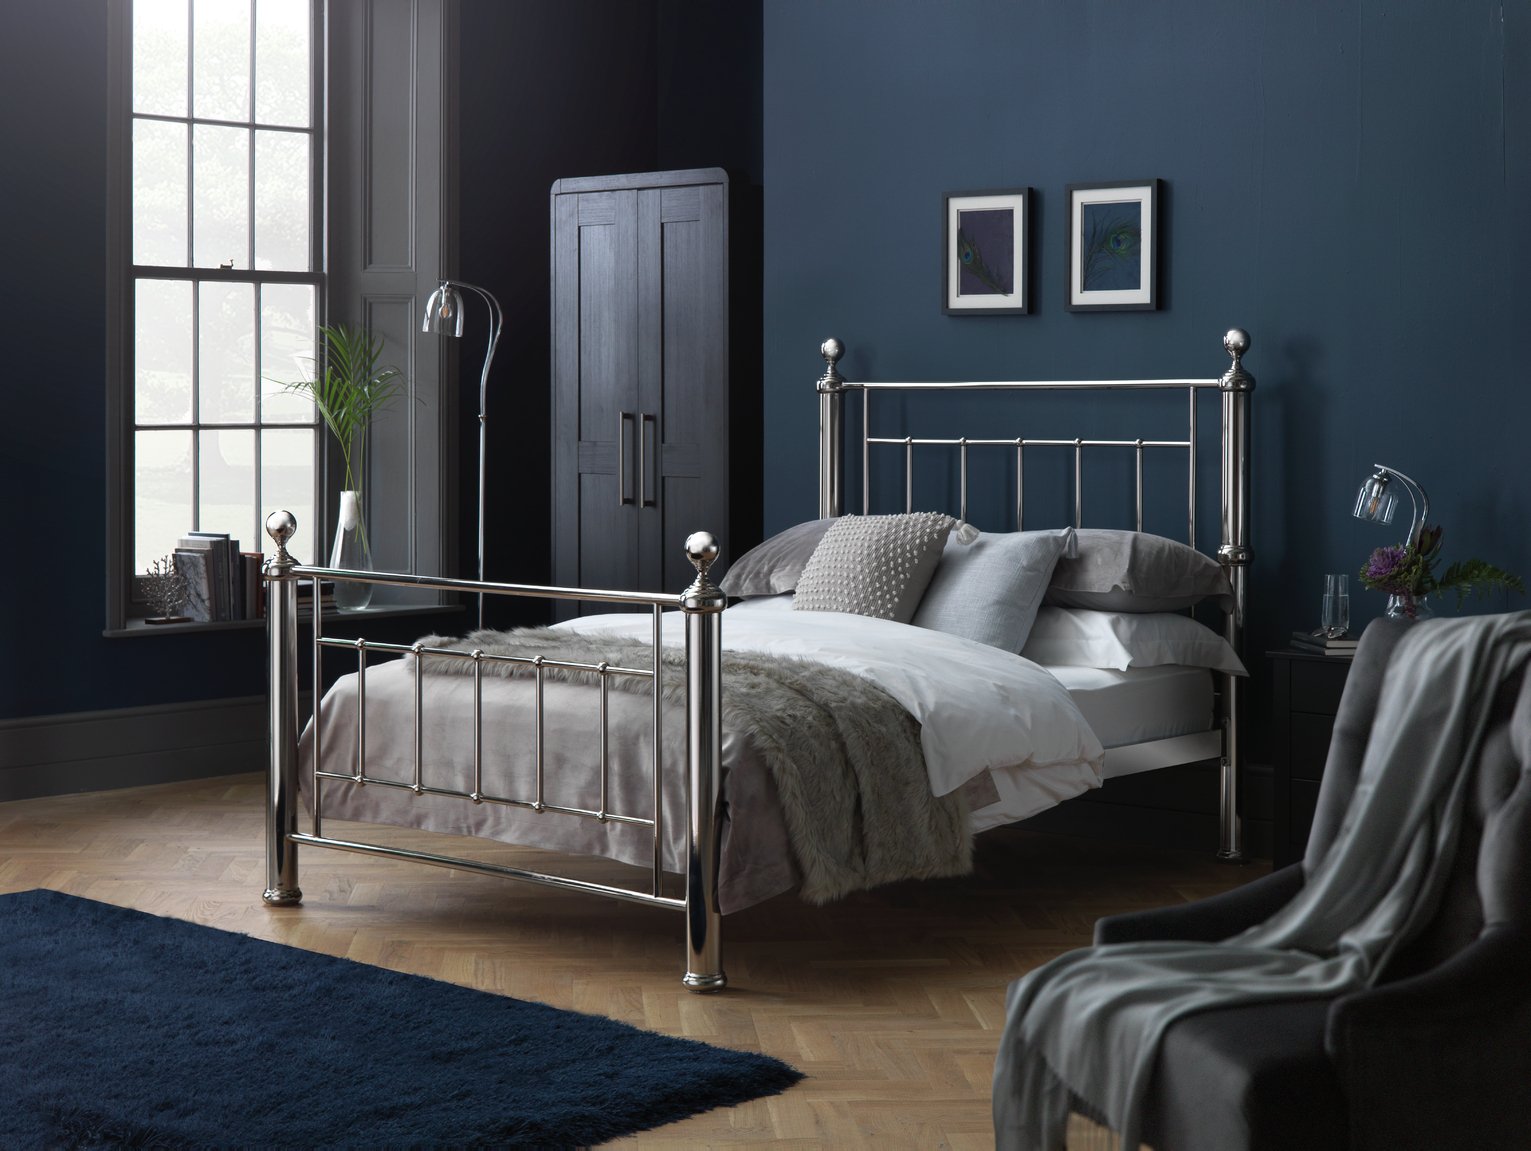 Argos Home Mayfair Kingsize Metal Bed Frame Review